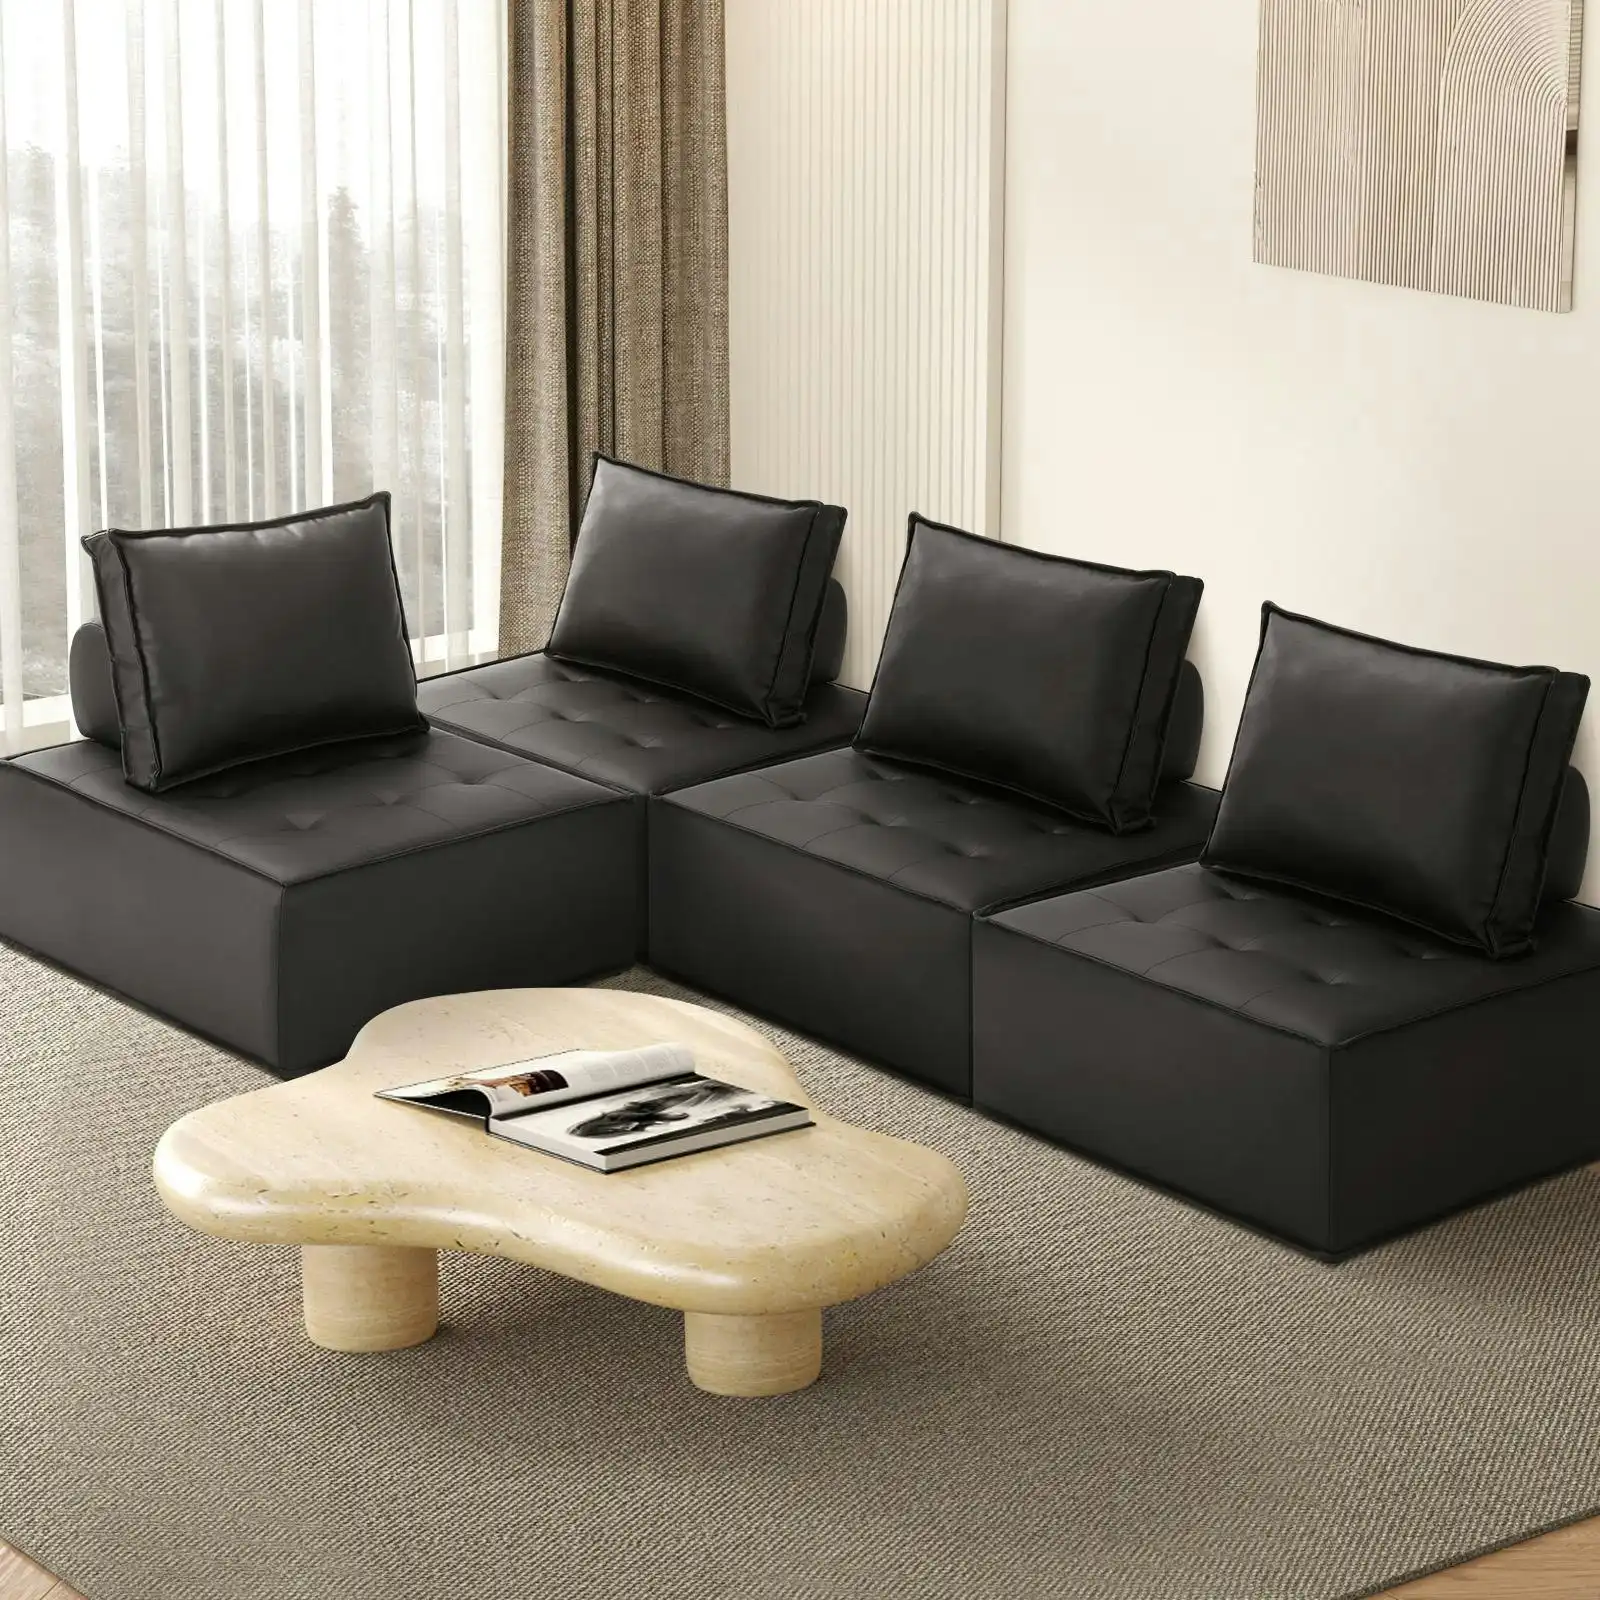 Oikiture 4PC Modular Sofa Lounge Chair Armless TOFU Back PU Leather Black